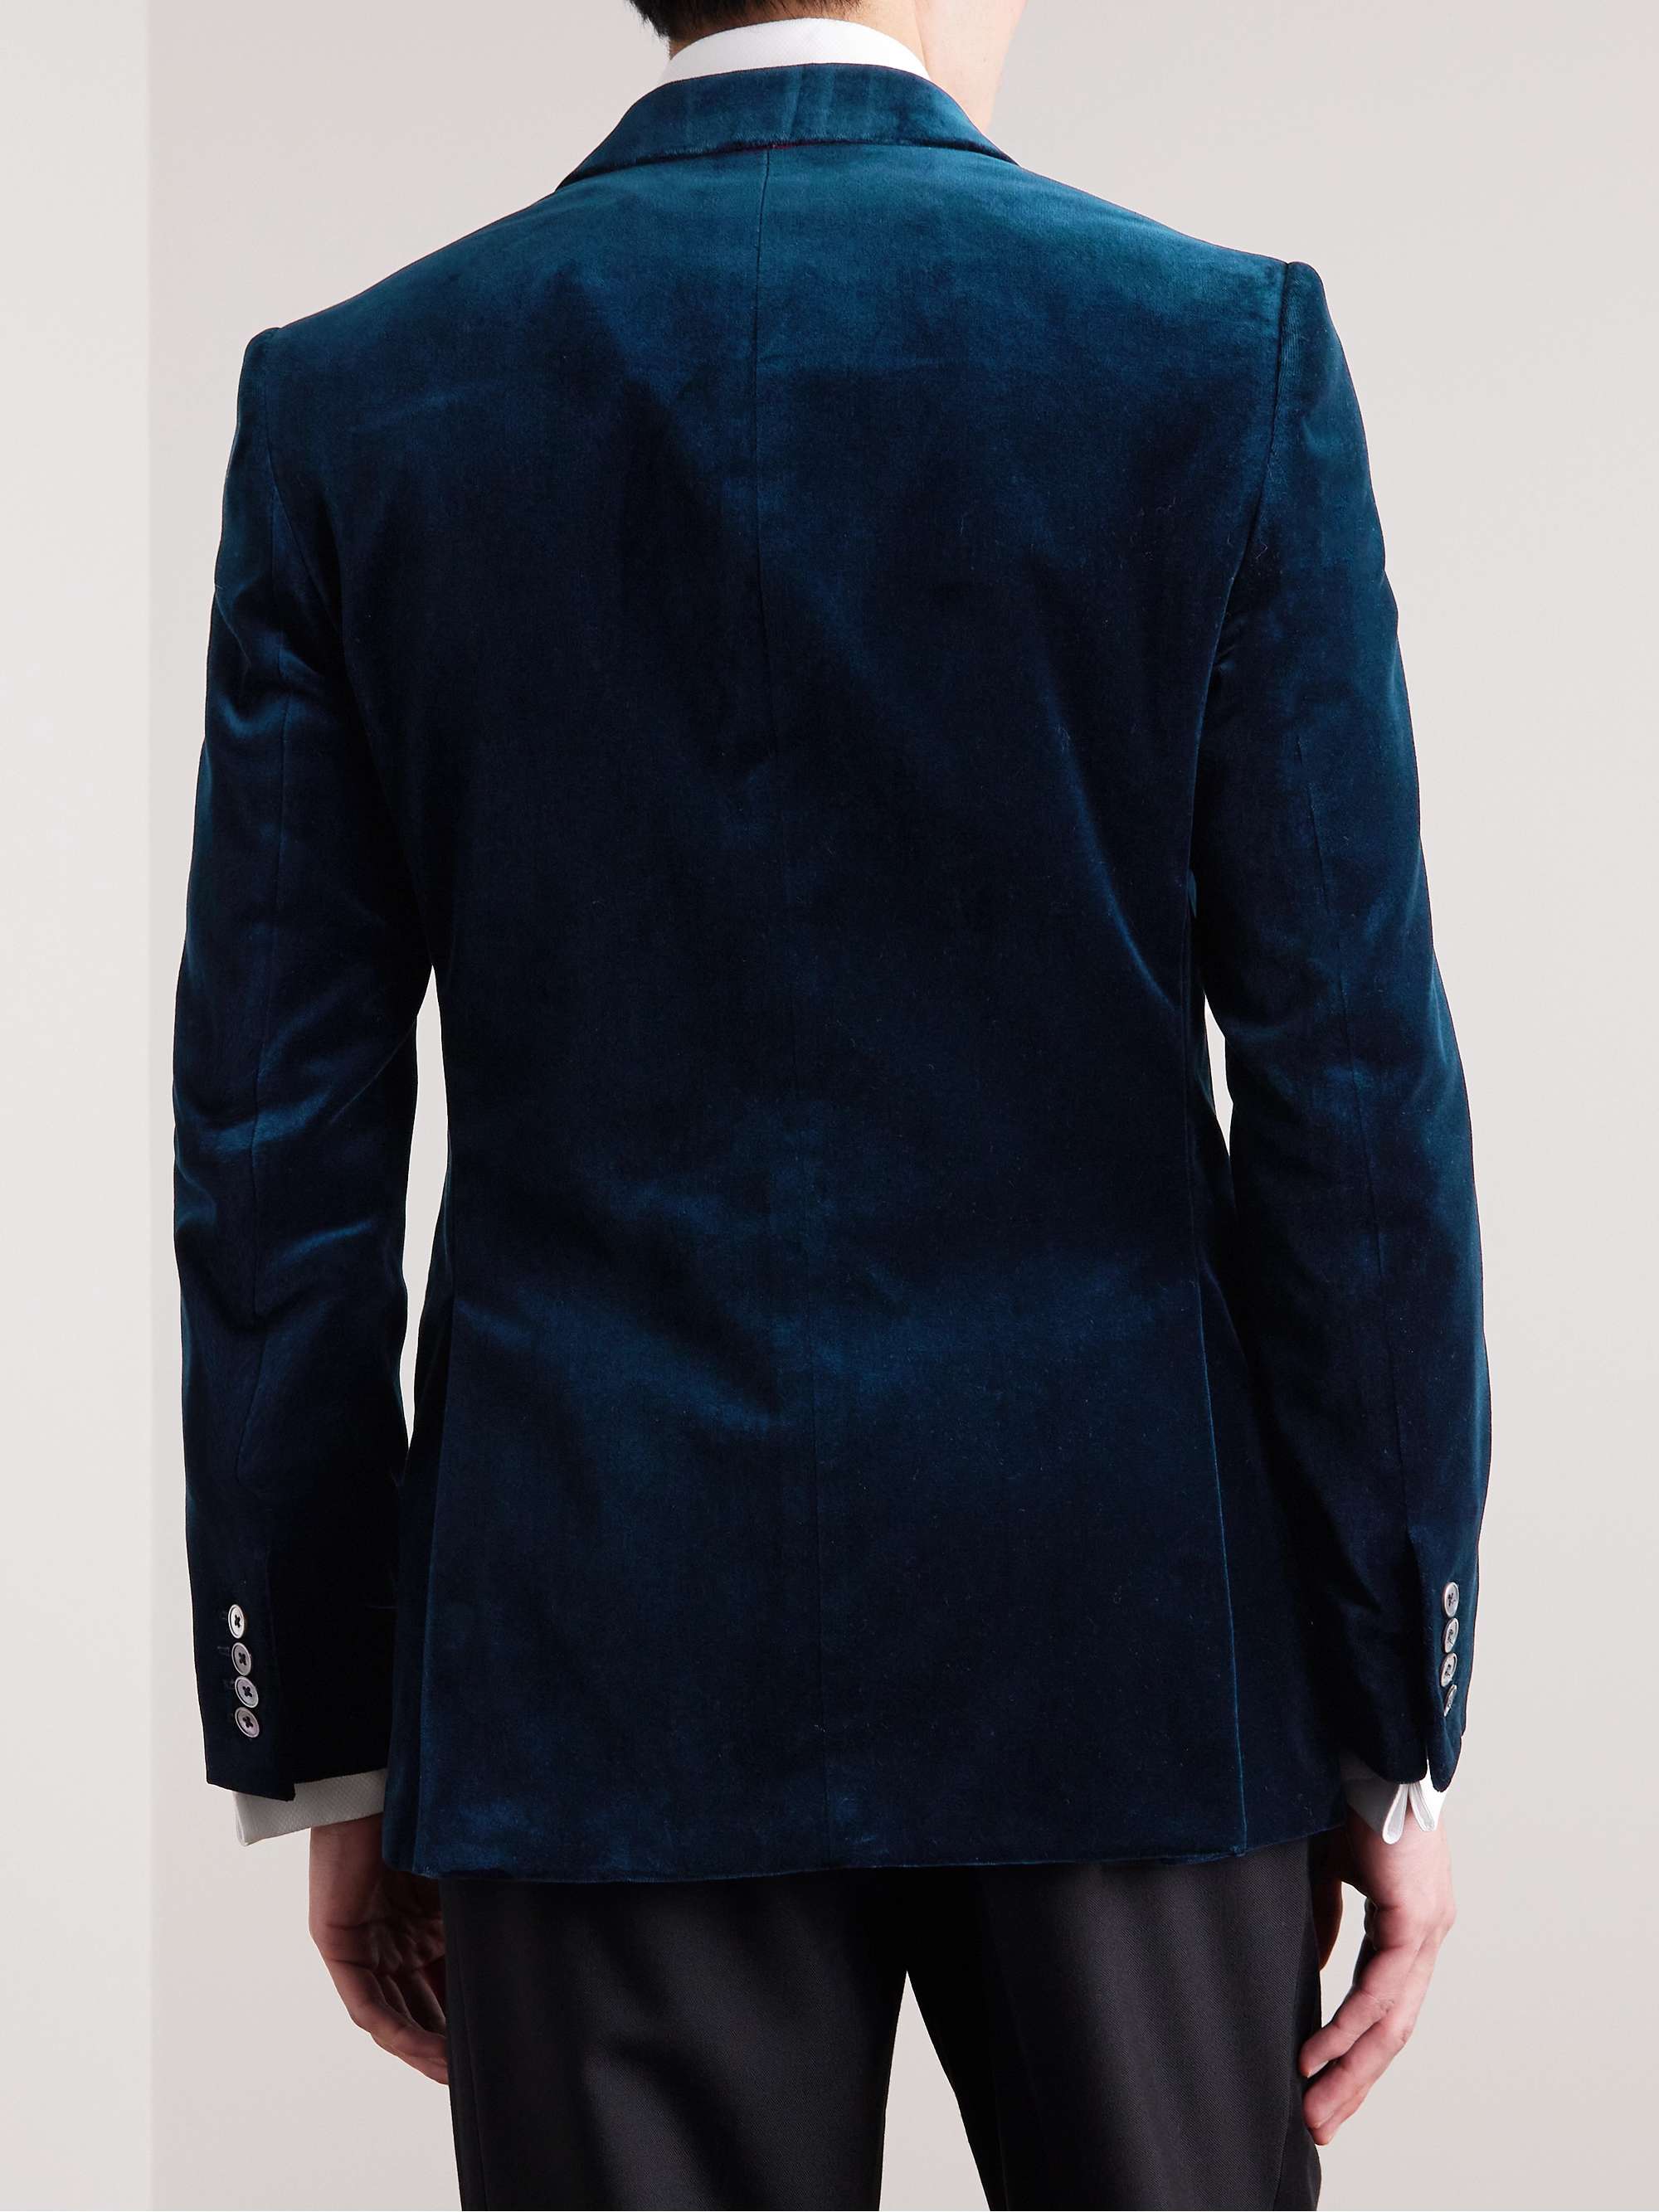 FAVOURBROOK Newport Slim-Fit Cotton-Velvet Jacket